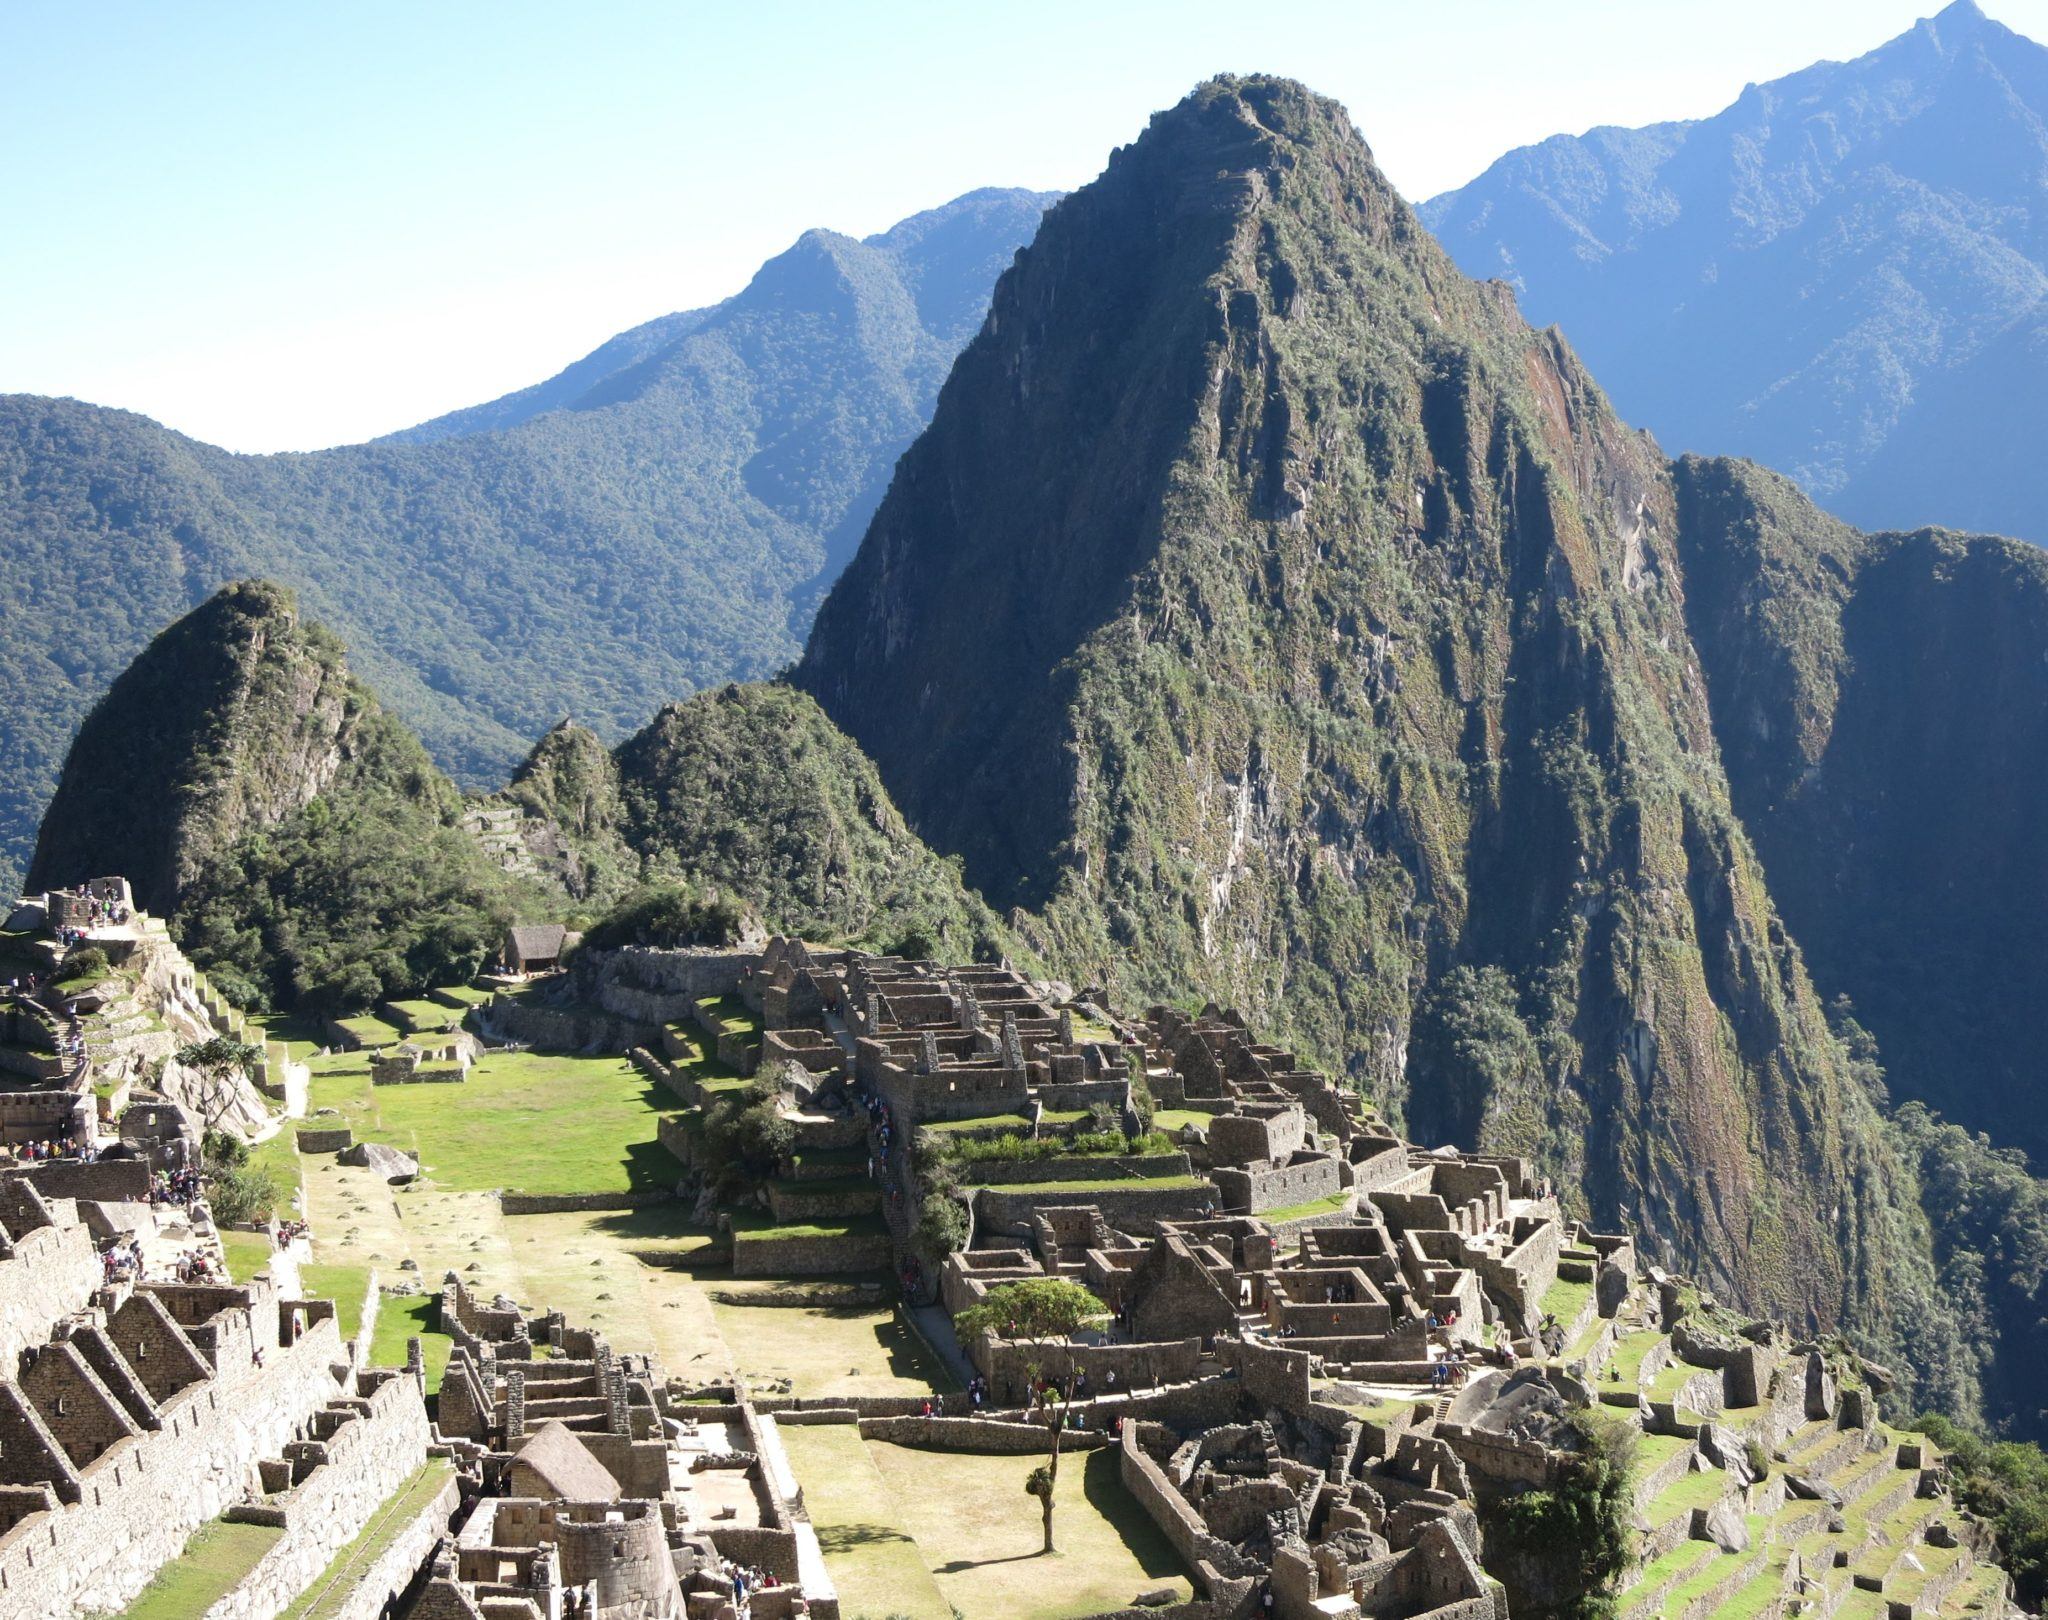 I definitely drank coca leaf tea before climbing Machu Picchu. 